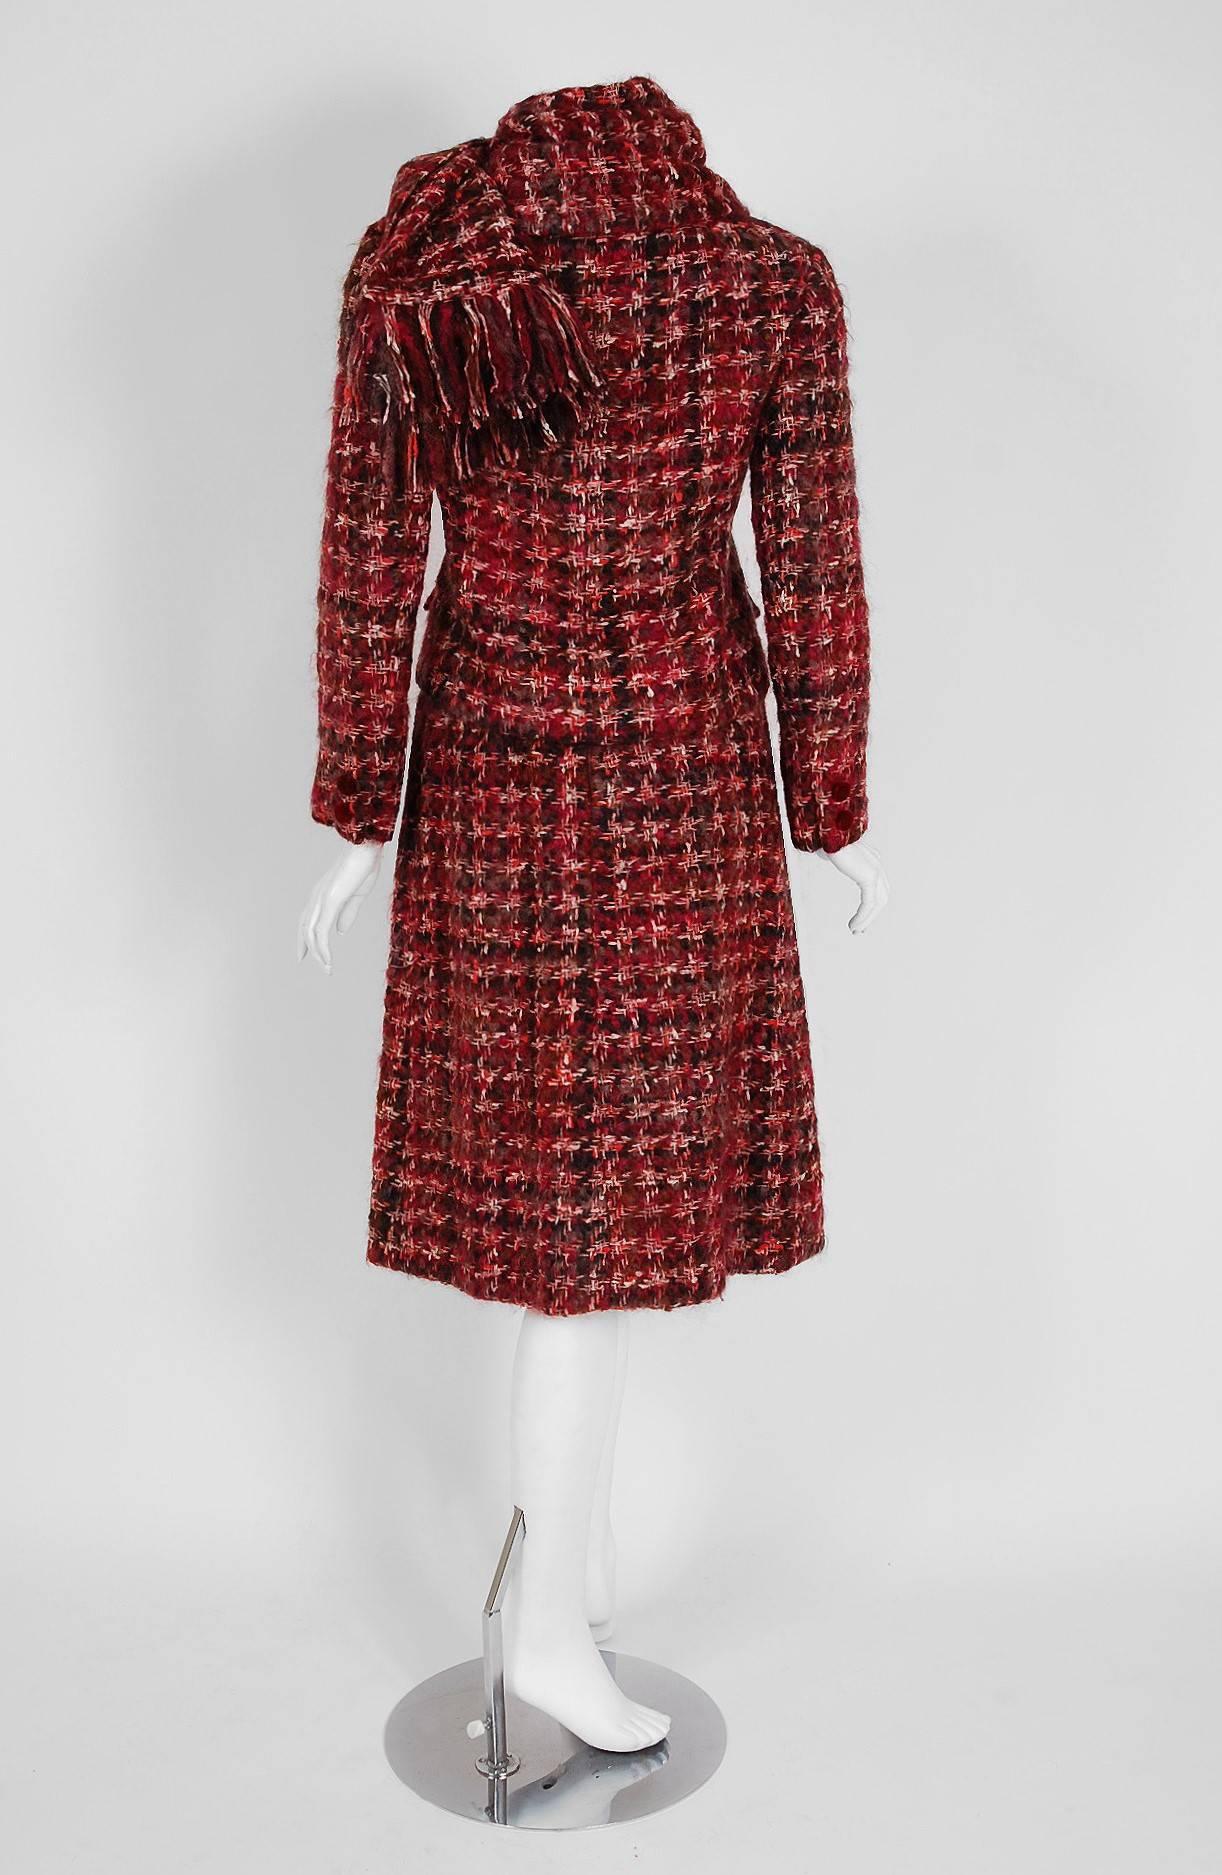 Women's 1964 Christian Dior Burgundy Wool-Tweed & Velvet Mod Dress Suit Scarf Ensemble 